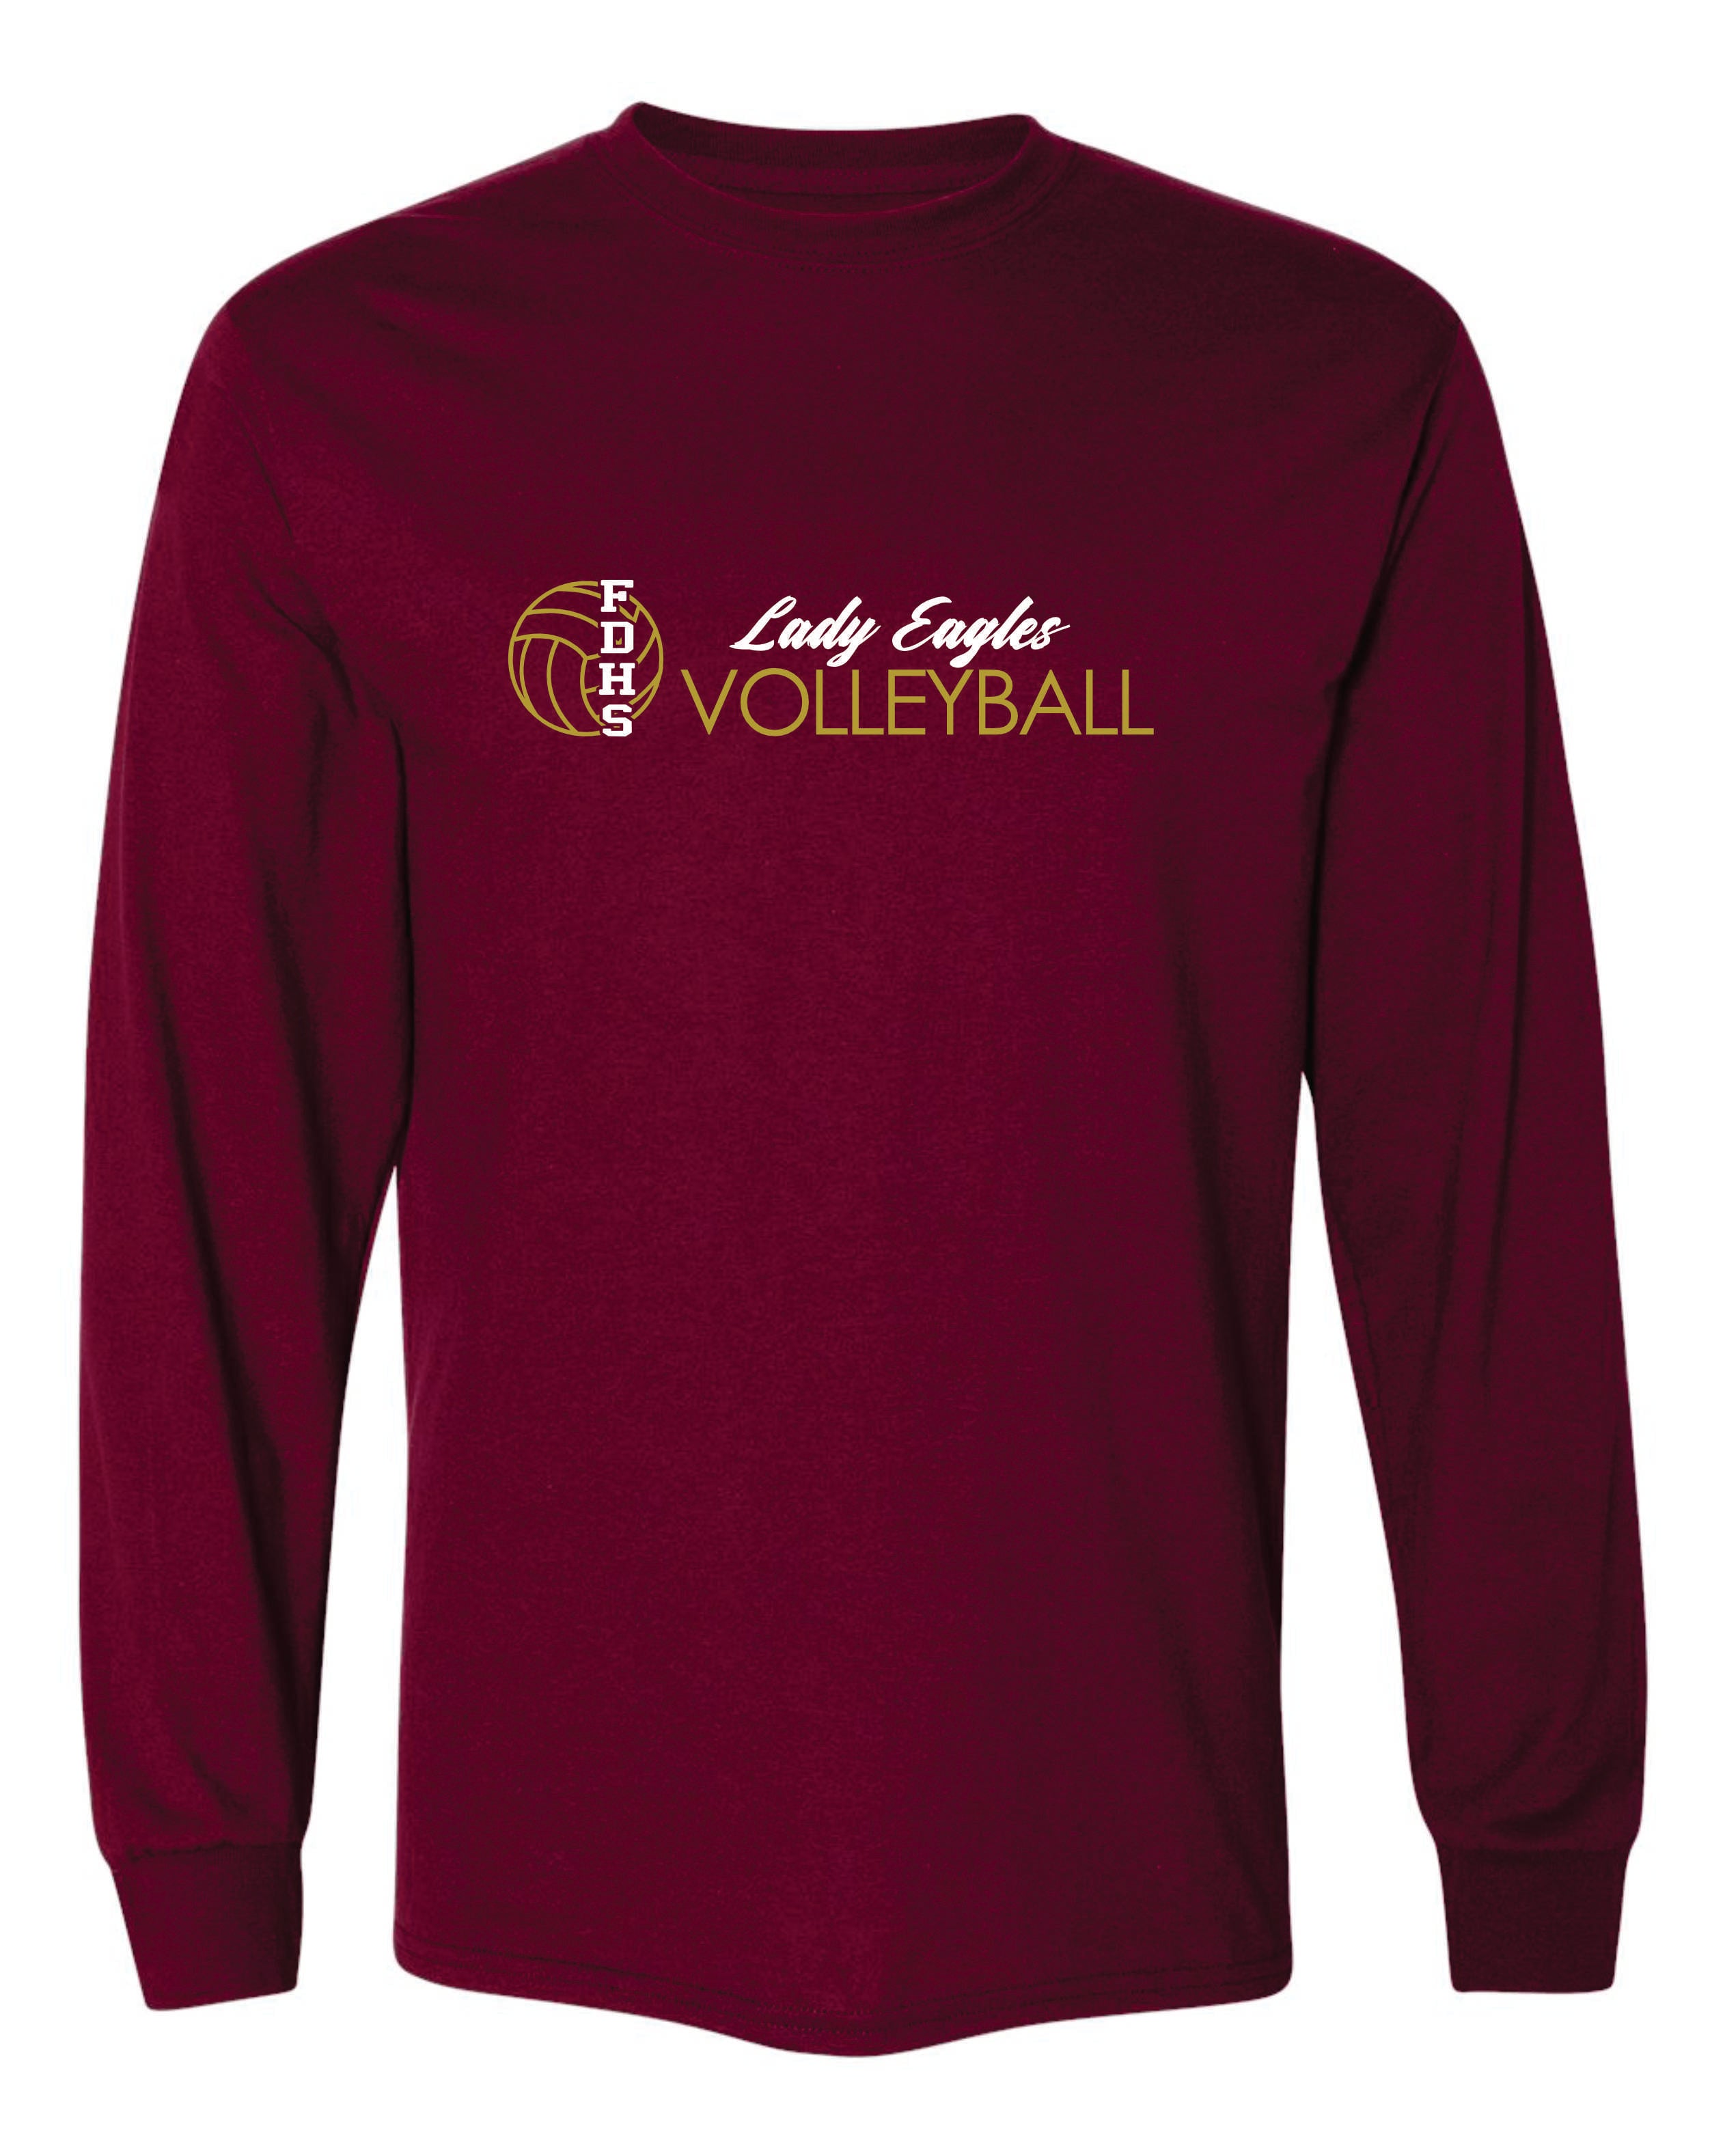 Douglass Volleyball 50/50 Long Sleeve T-Shirts